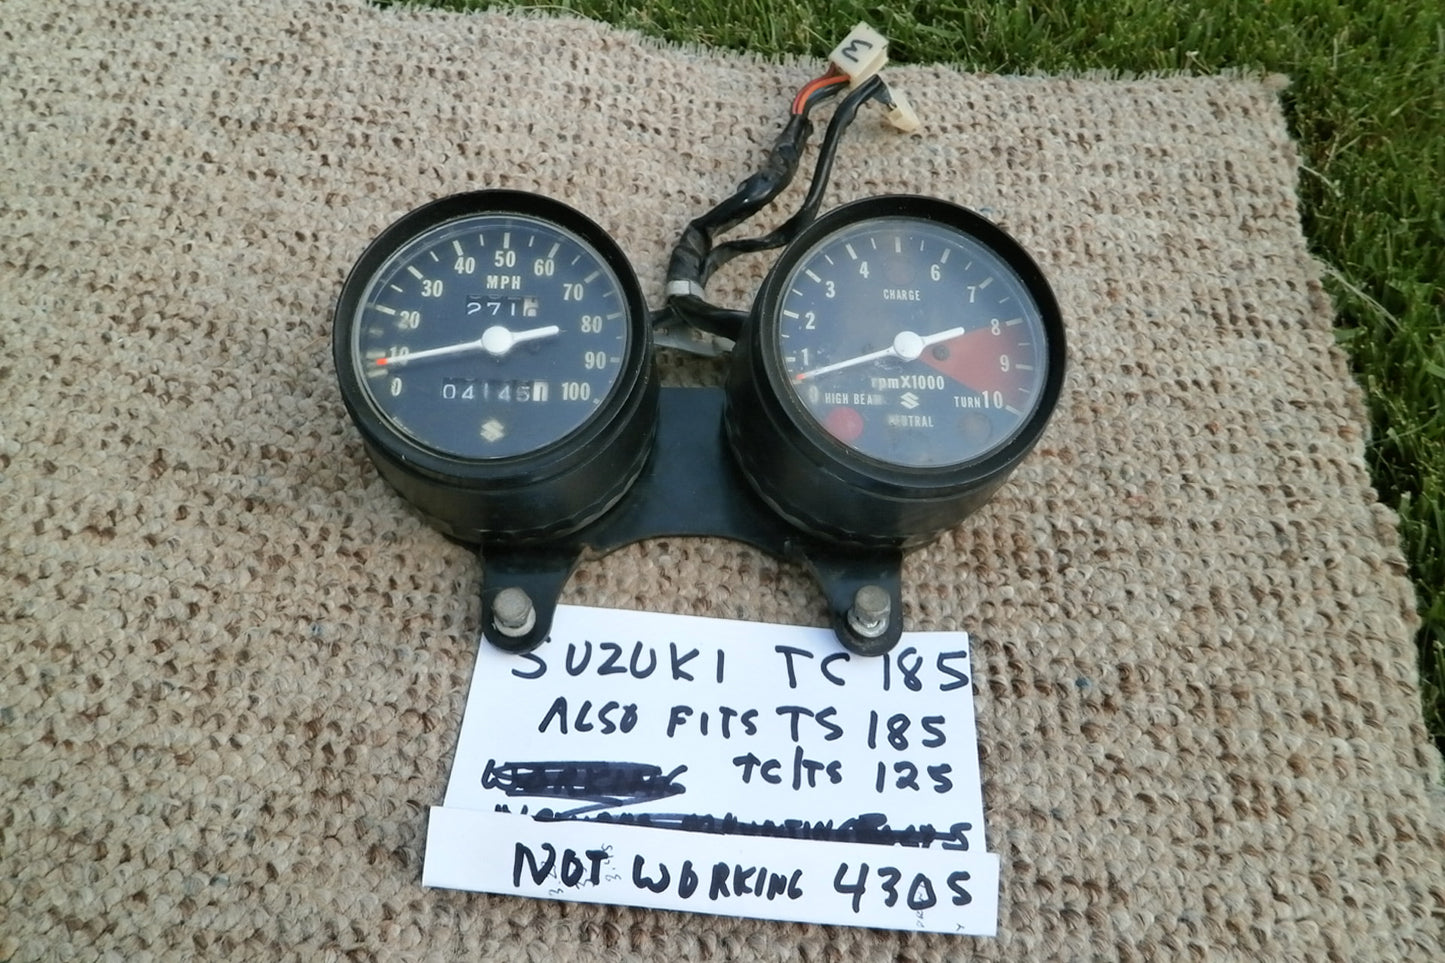 Sold by Invoice 040617 $39.00 Suzuki TC185 Speedometer Tachometer and Bracket Not Working 4305